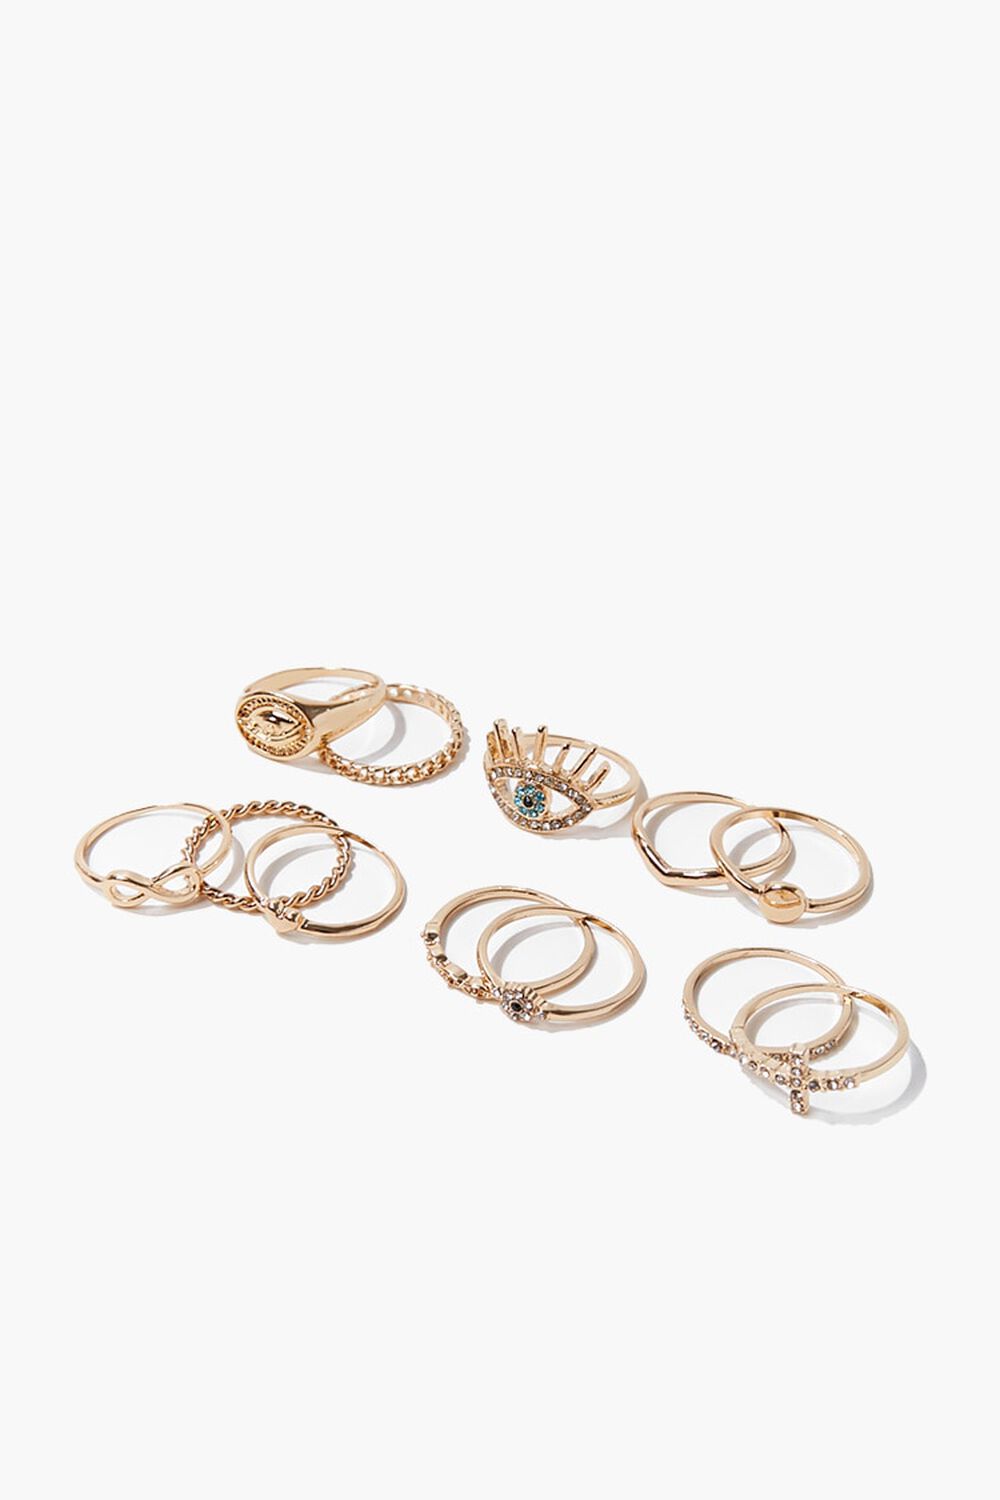 GOLD Eye Charm Variety Ring Set, image 1